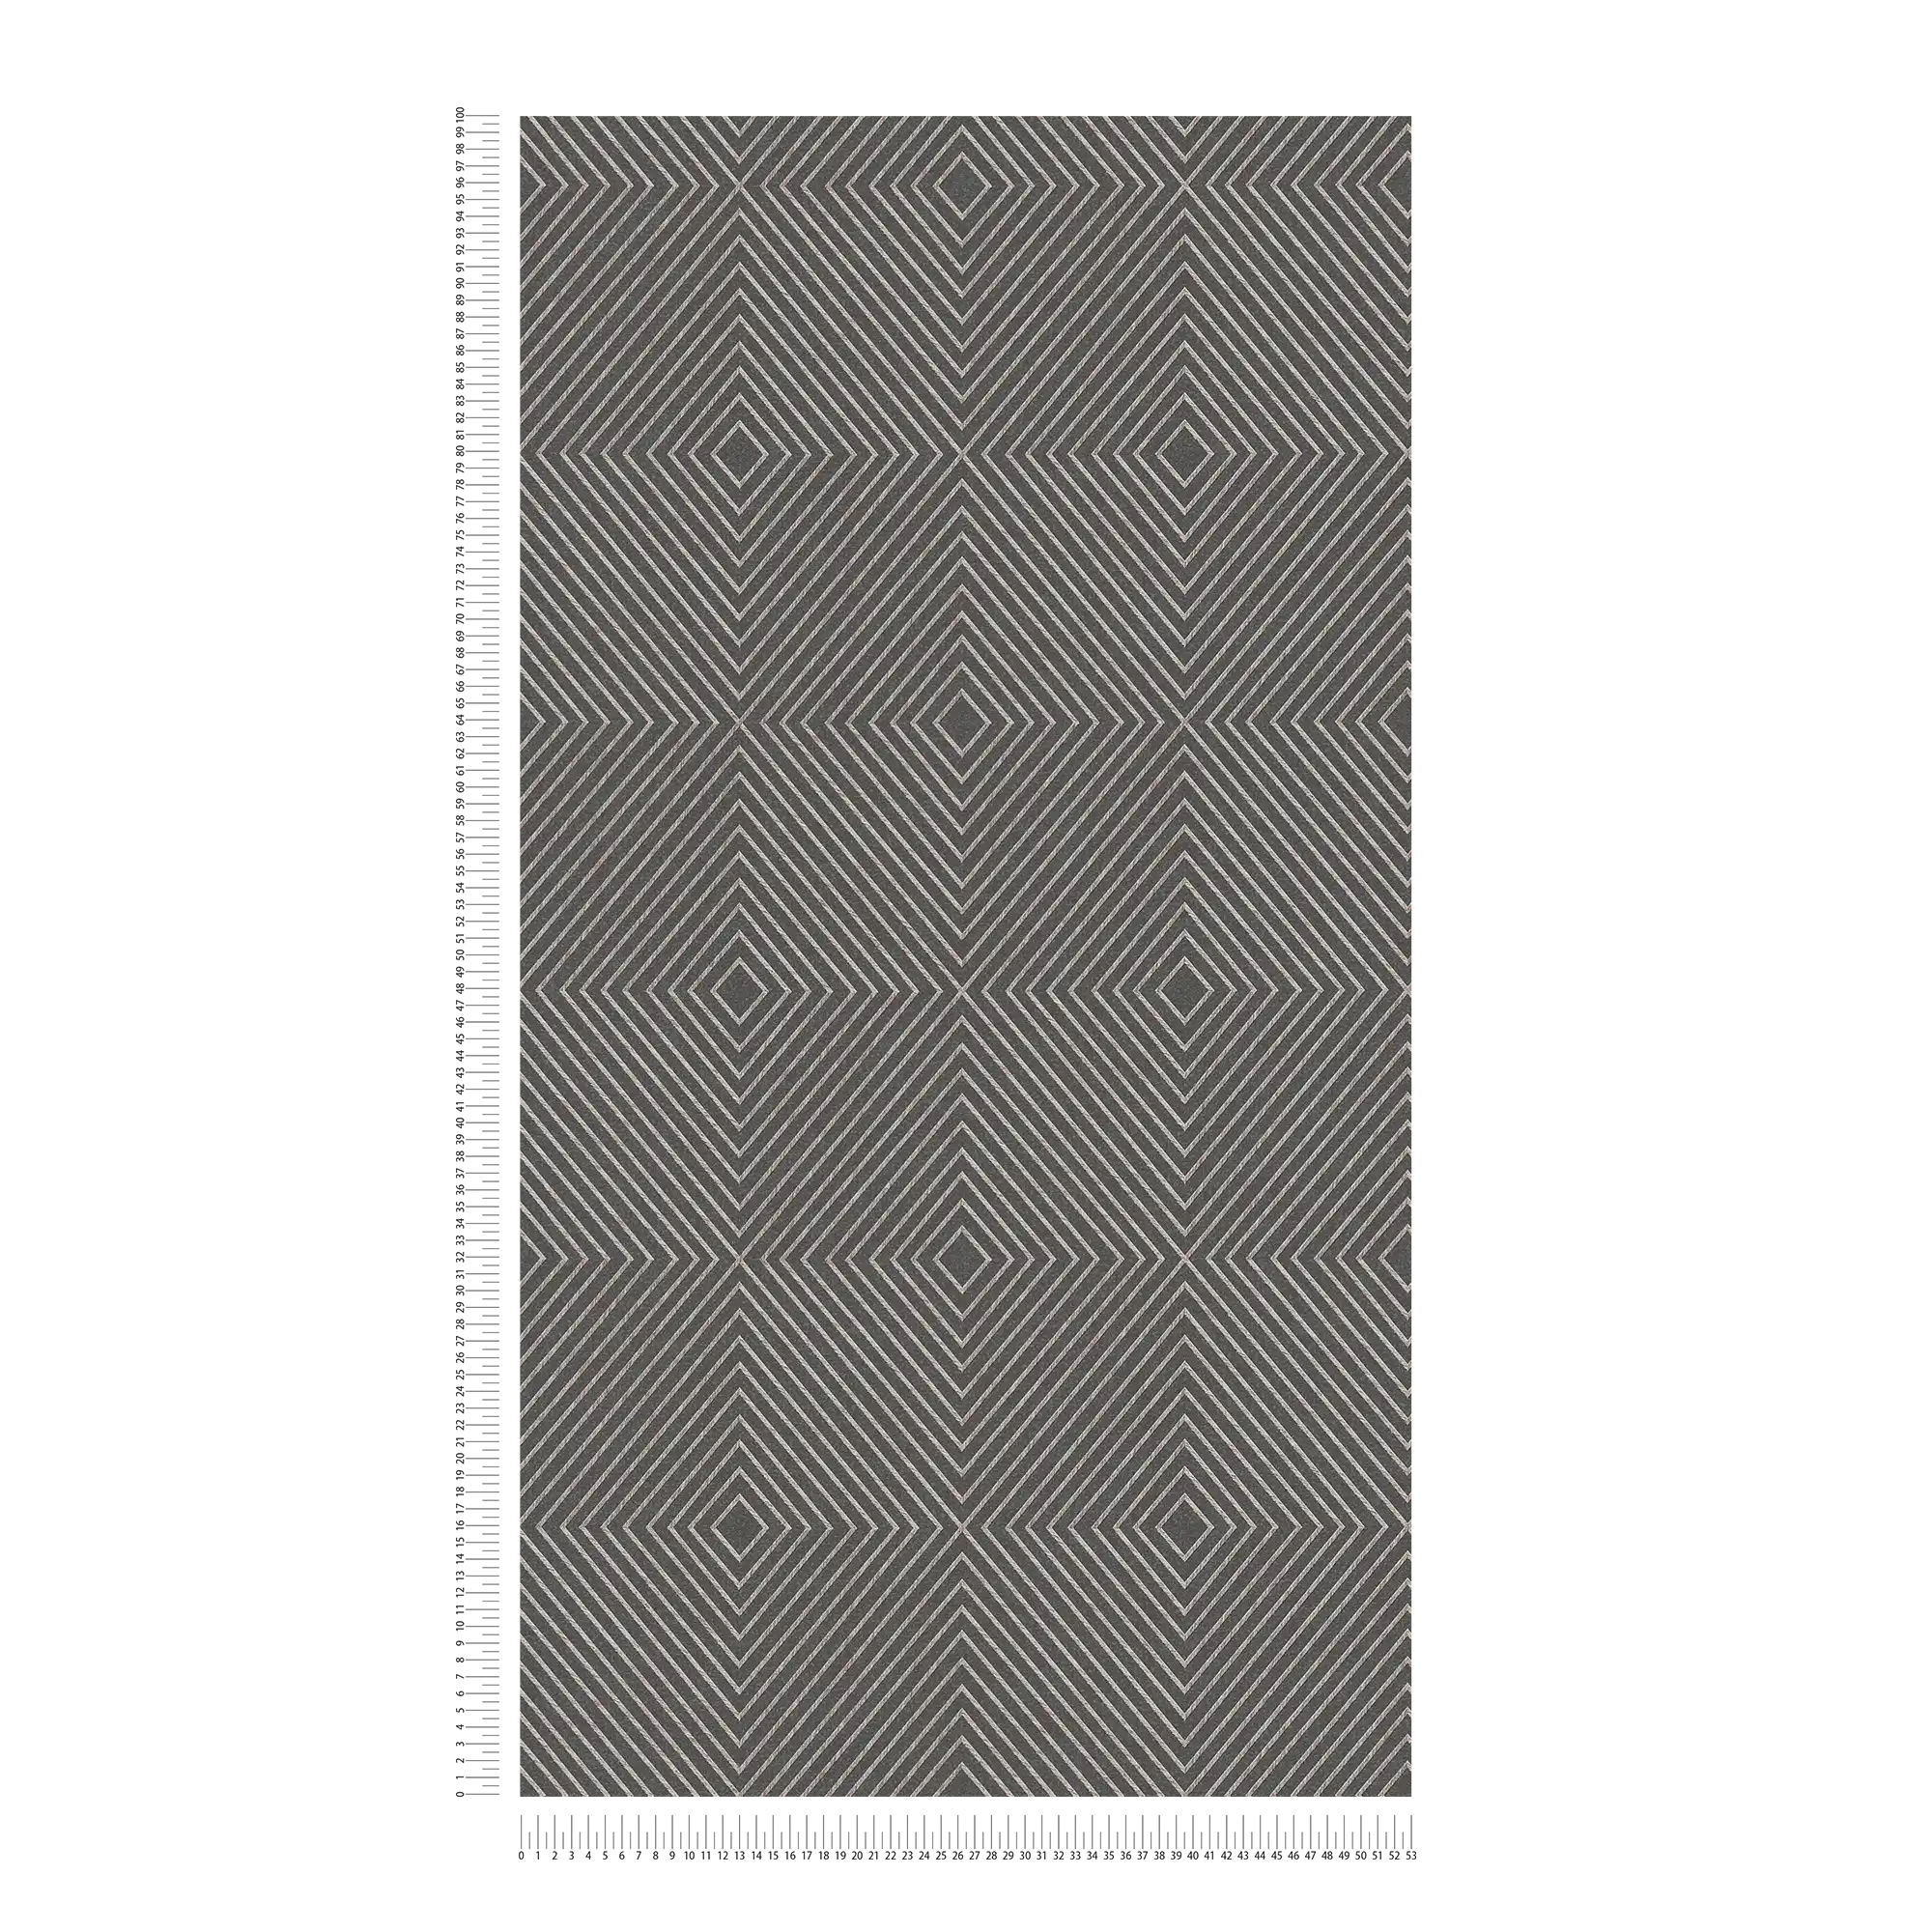             carta da parati design grafico, stile scandinavo - grigio, argento
        